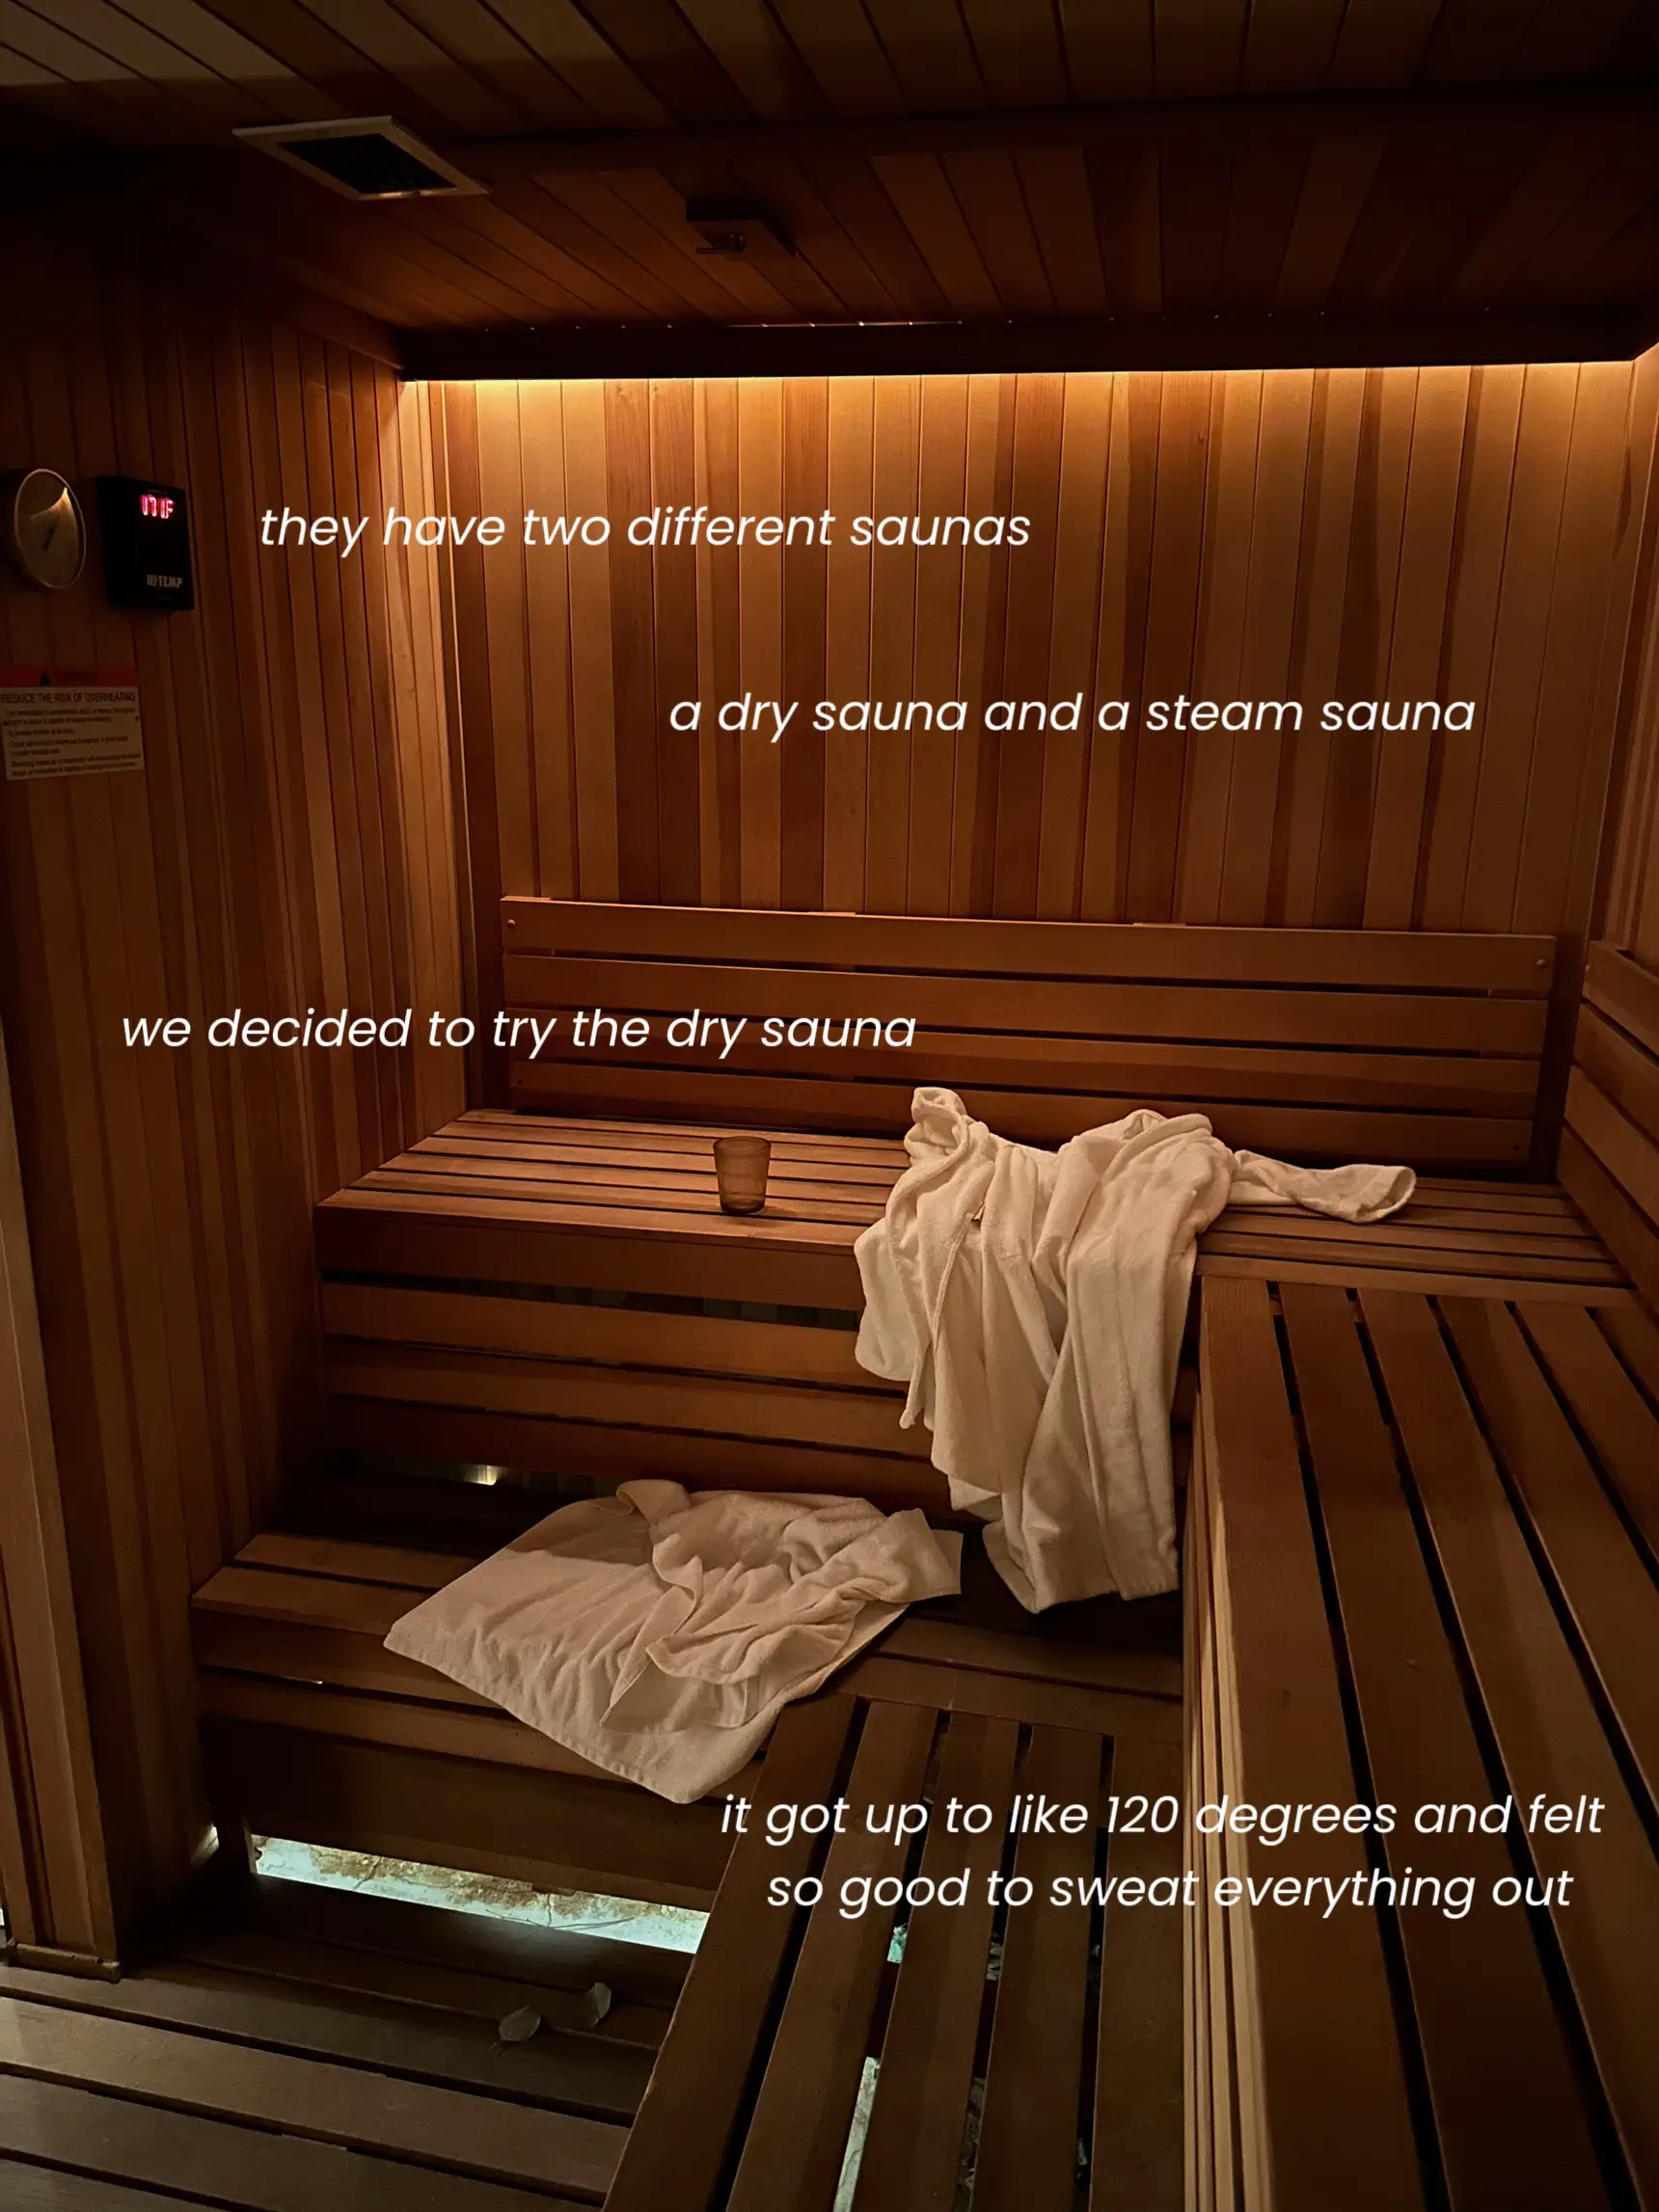  A text describing two different saunas